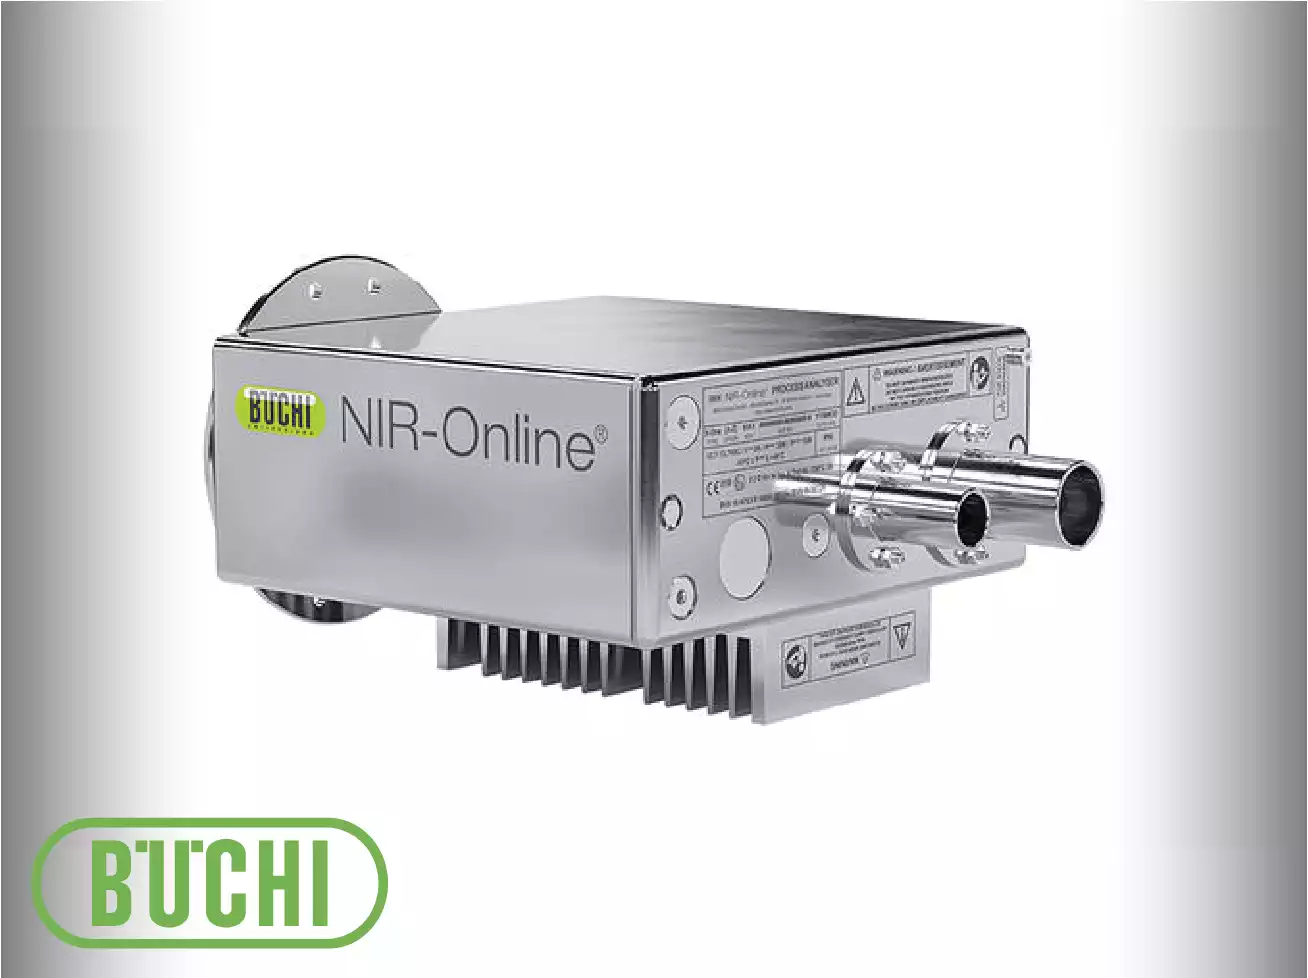 Buchi NIR-Online Multipoint Systems